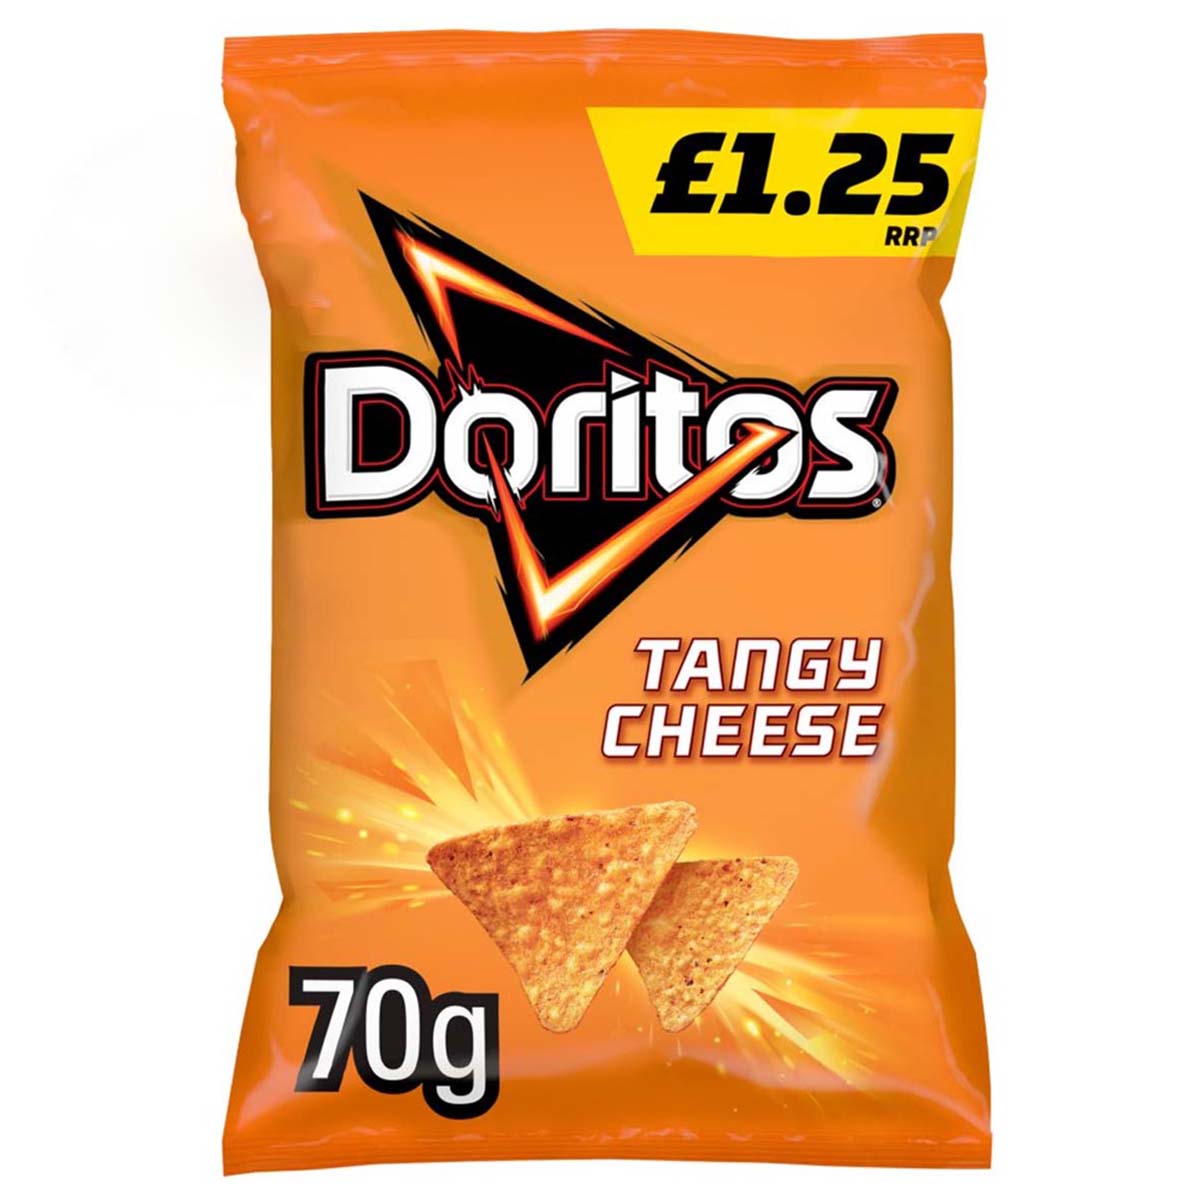 Doritos - Tangy Cheese Tortilla Chips - 70g - Continental Food Store